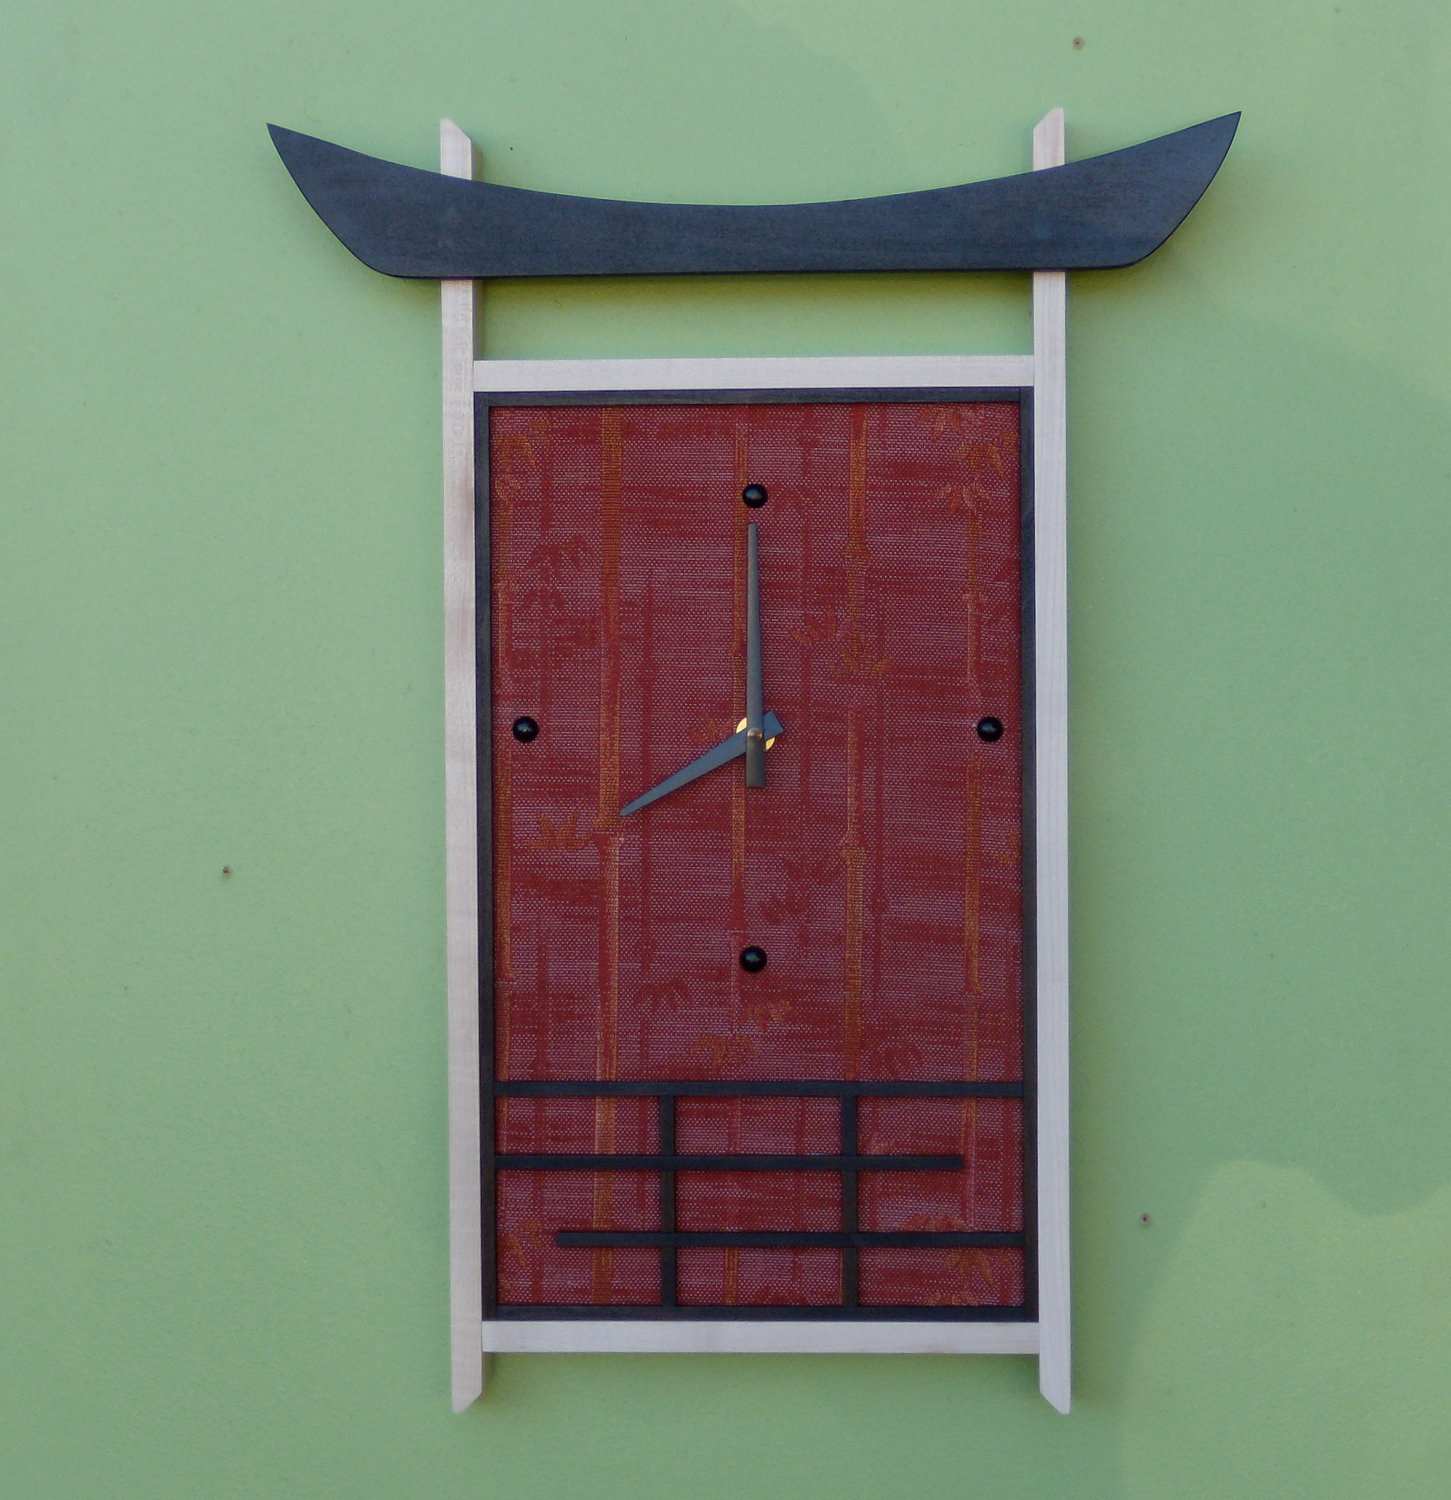 Contemporary Asian Wall Clock